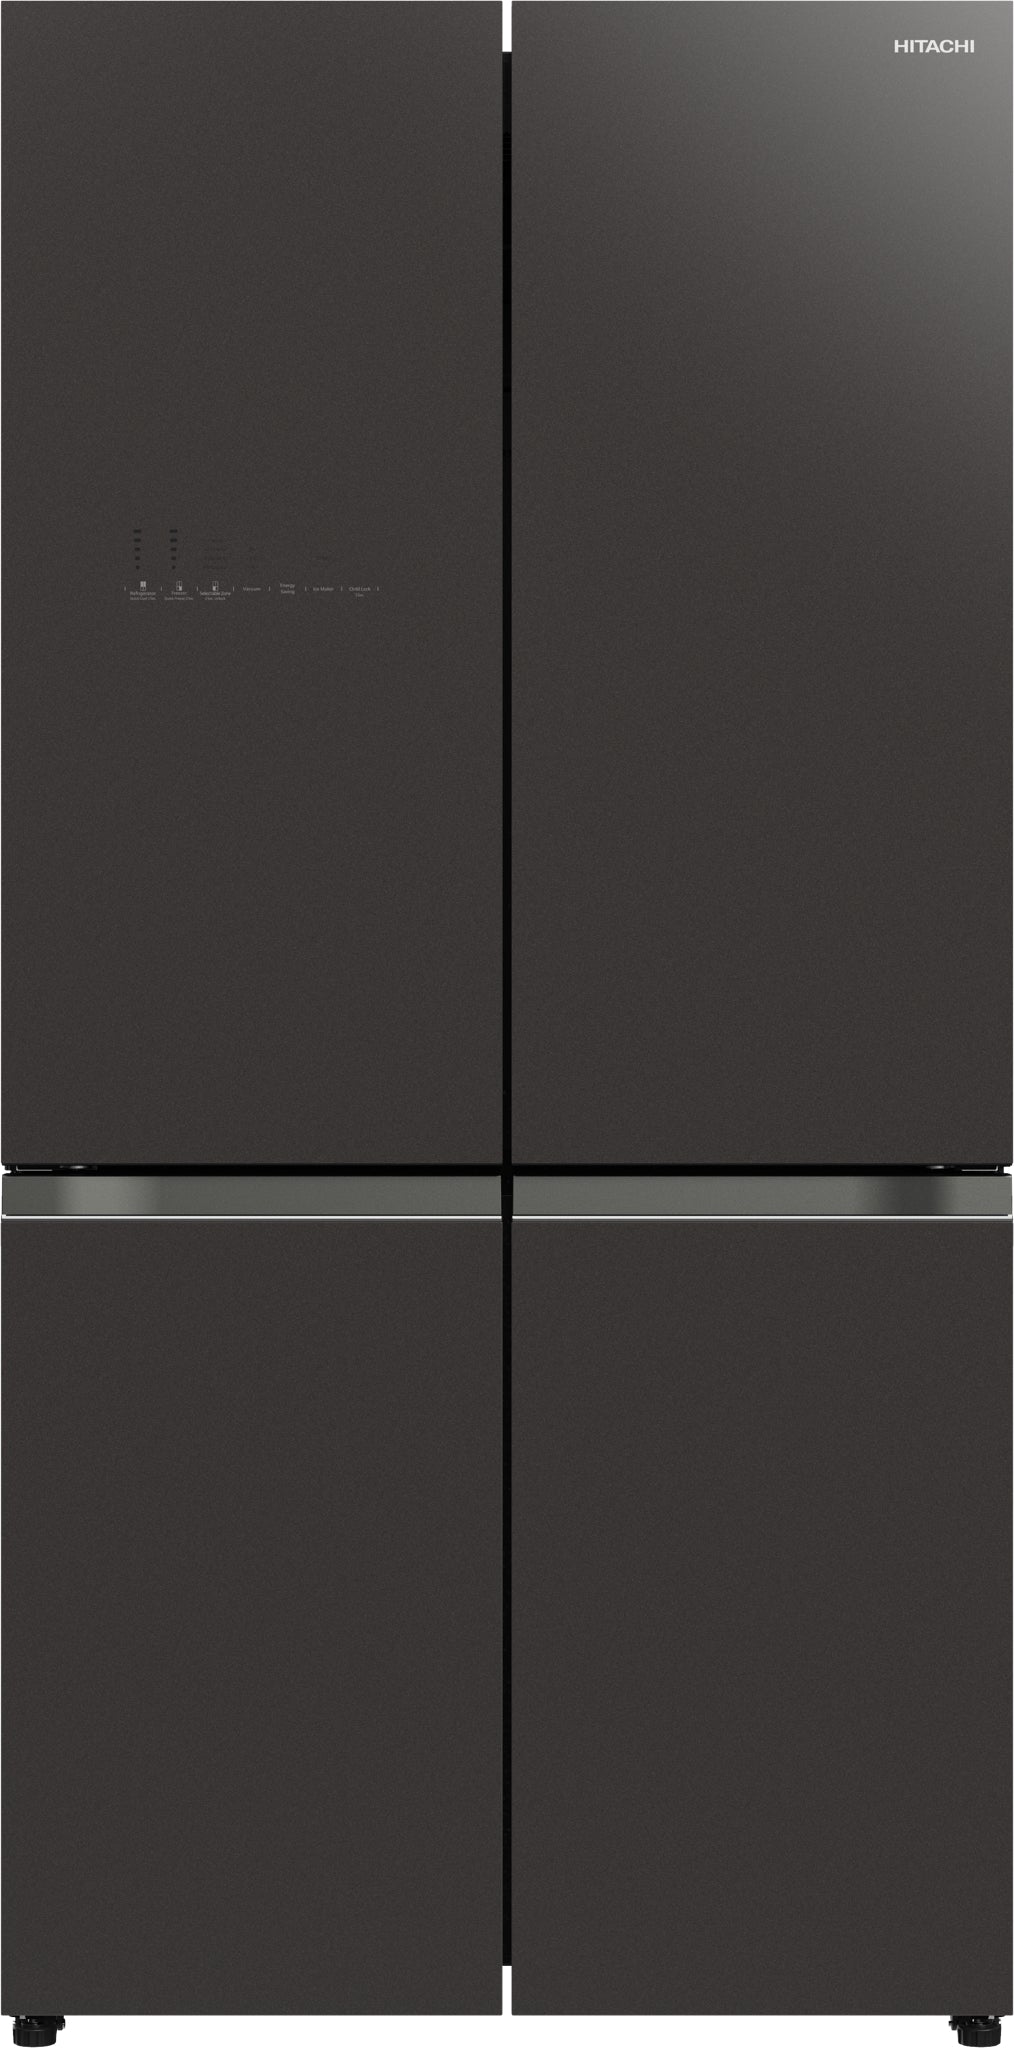 Hitachi Refrigerator R-WB720 (31ft)